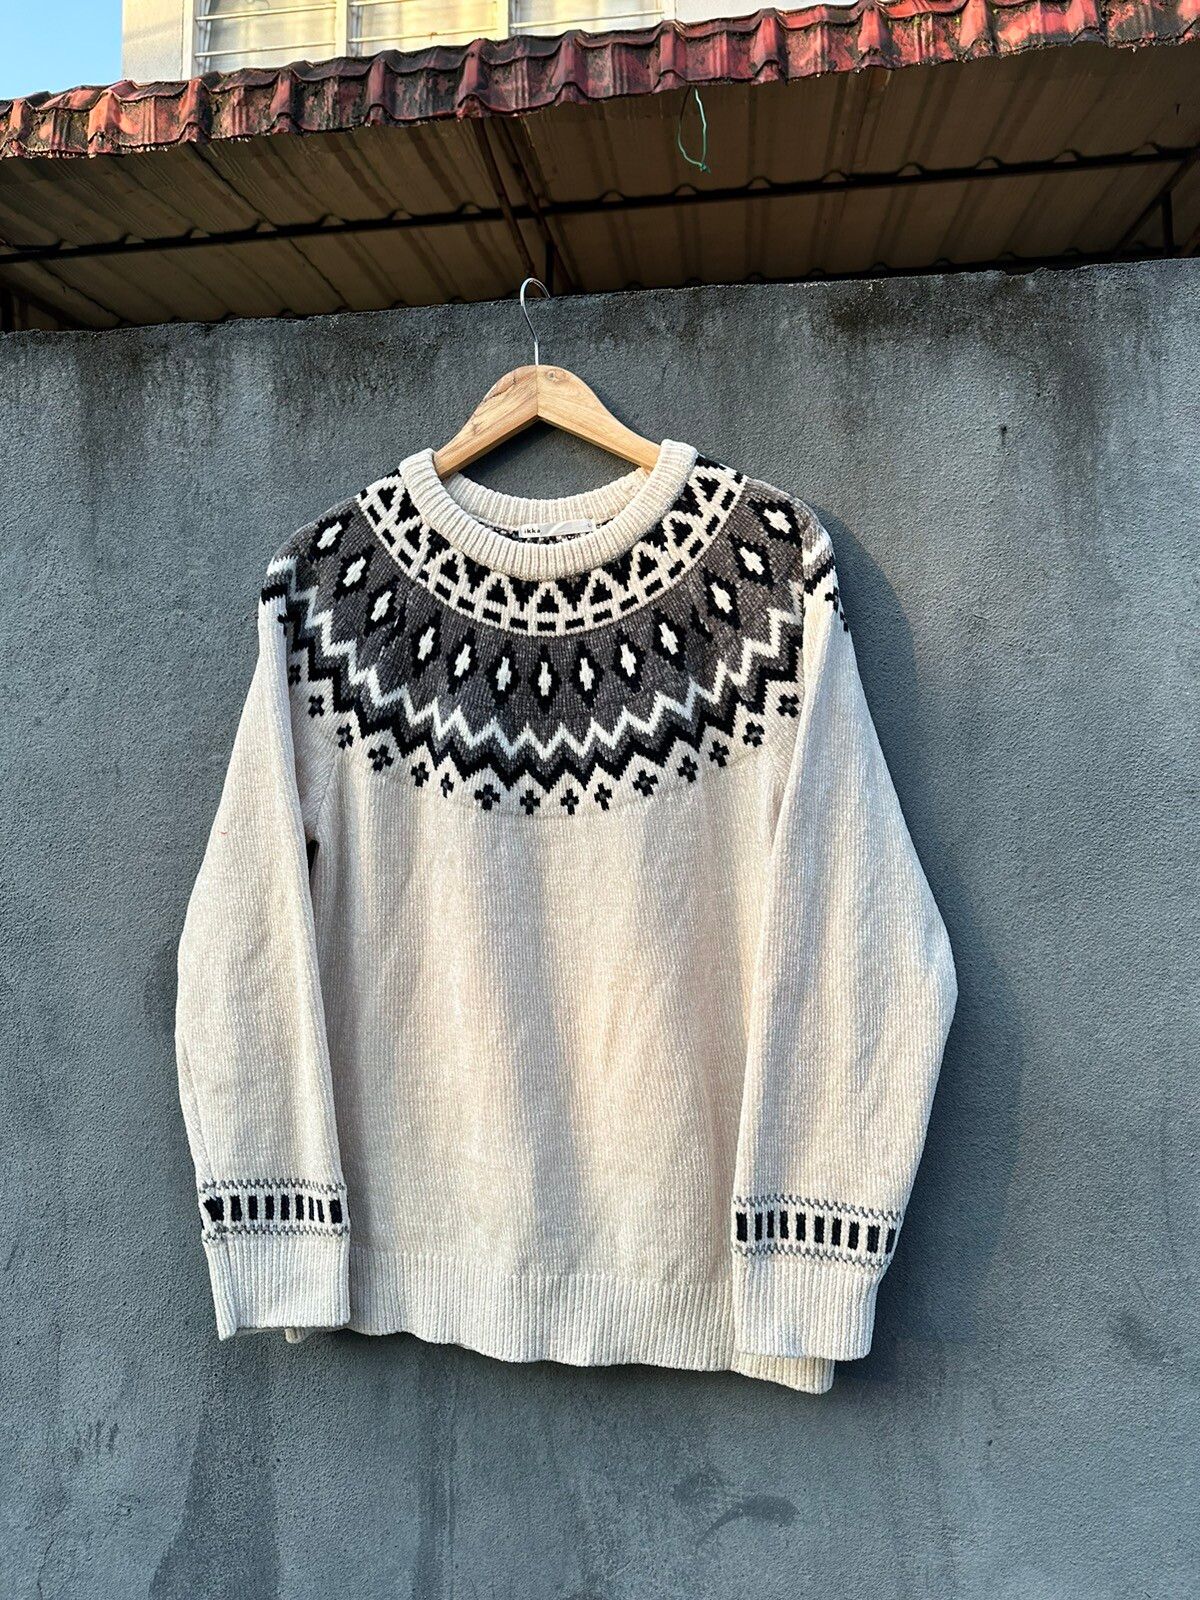 Japanese Brand Ikka Knitted Sweatshirt Size US M / EU 48-50 / 2 - 2 Preview